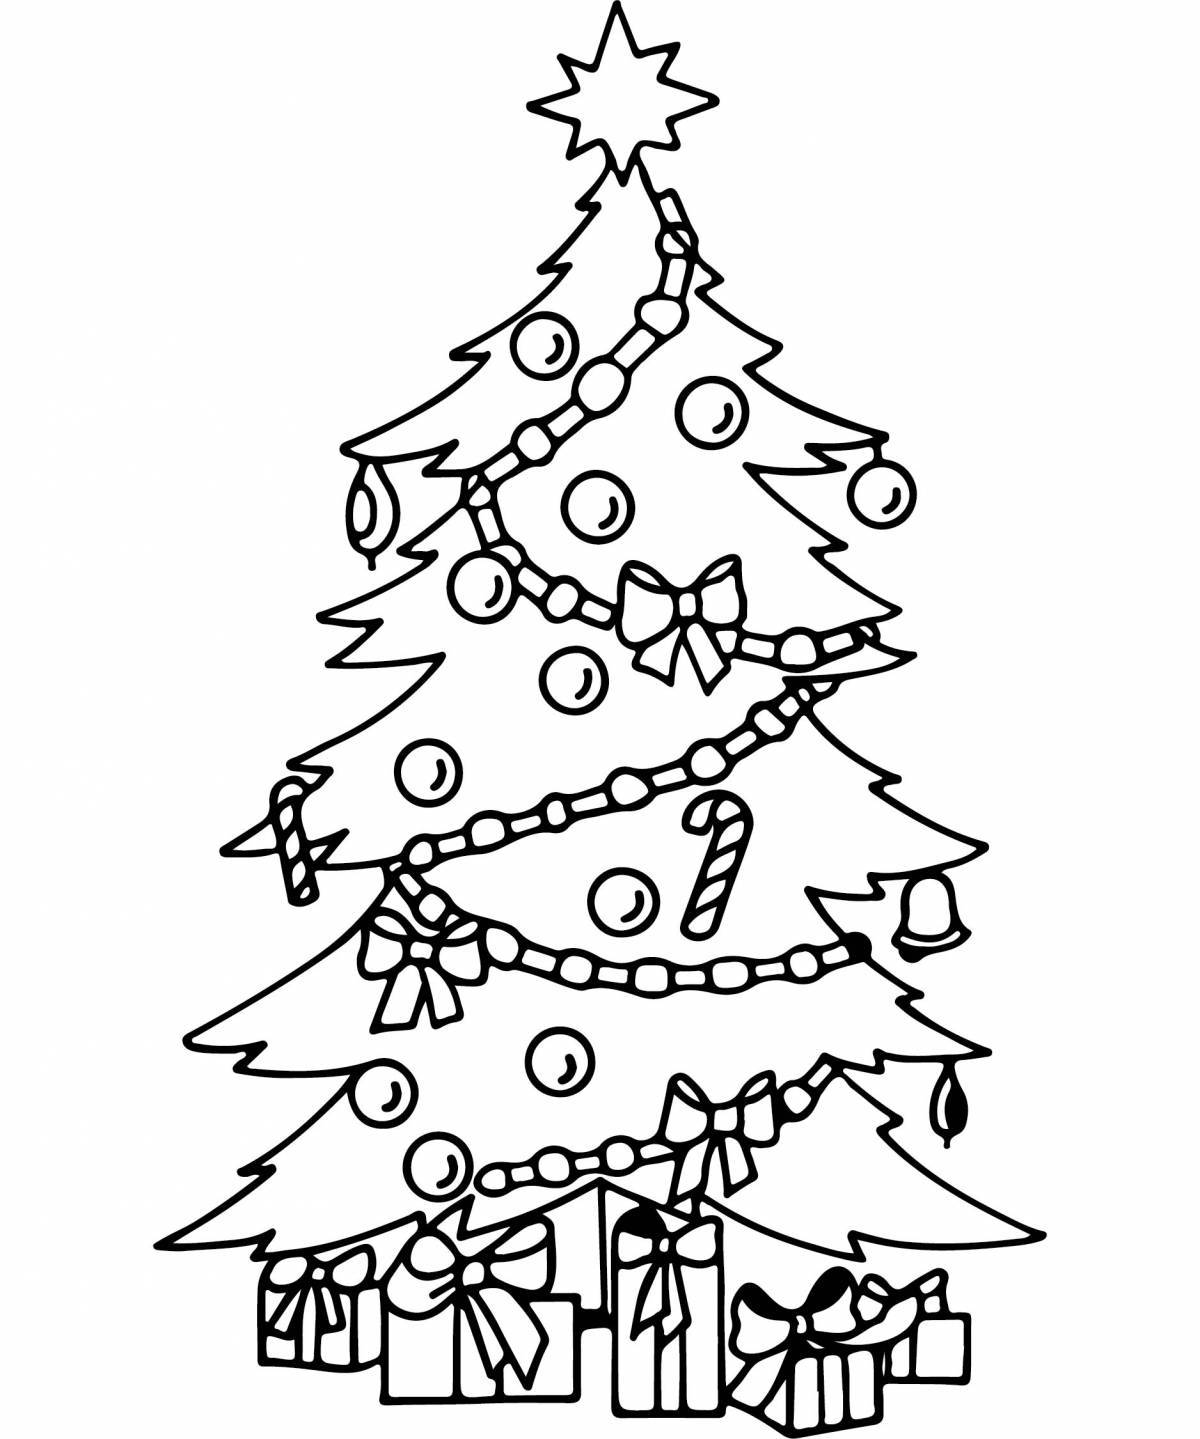 Christmas tree glamor coloring book